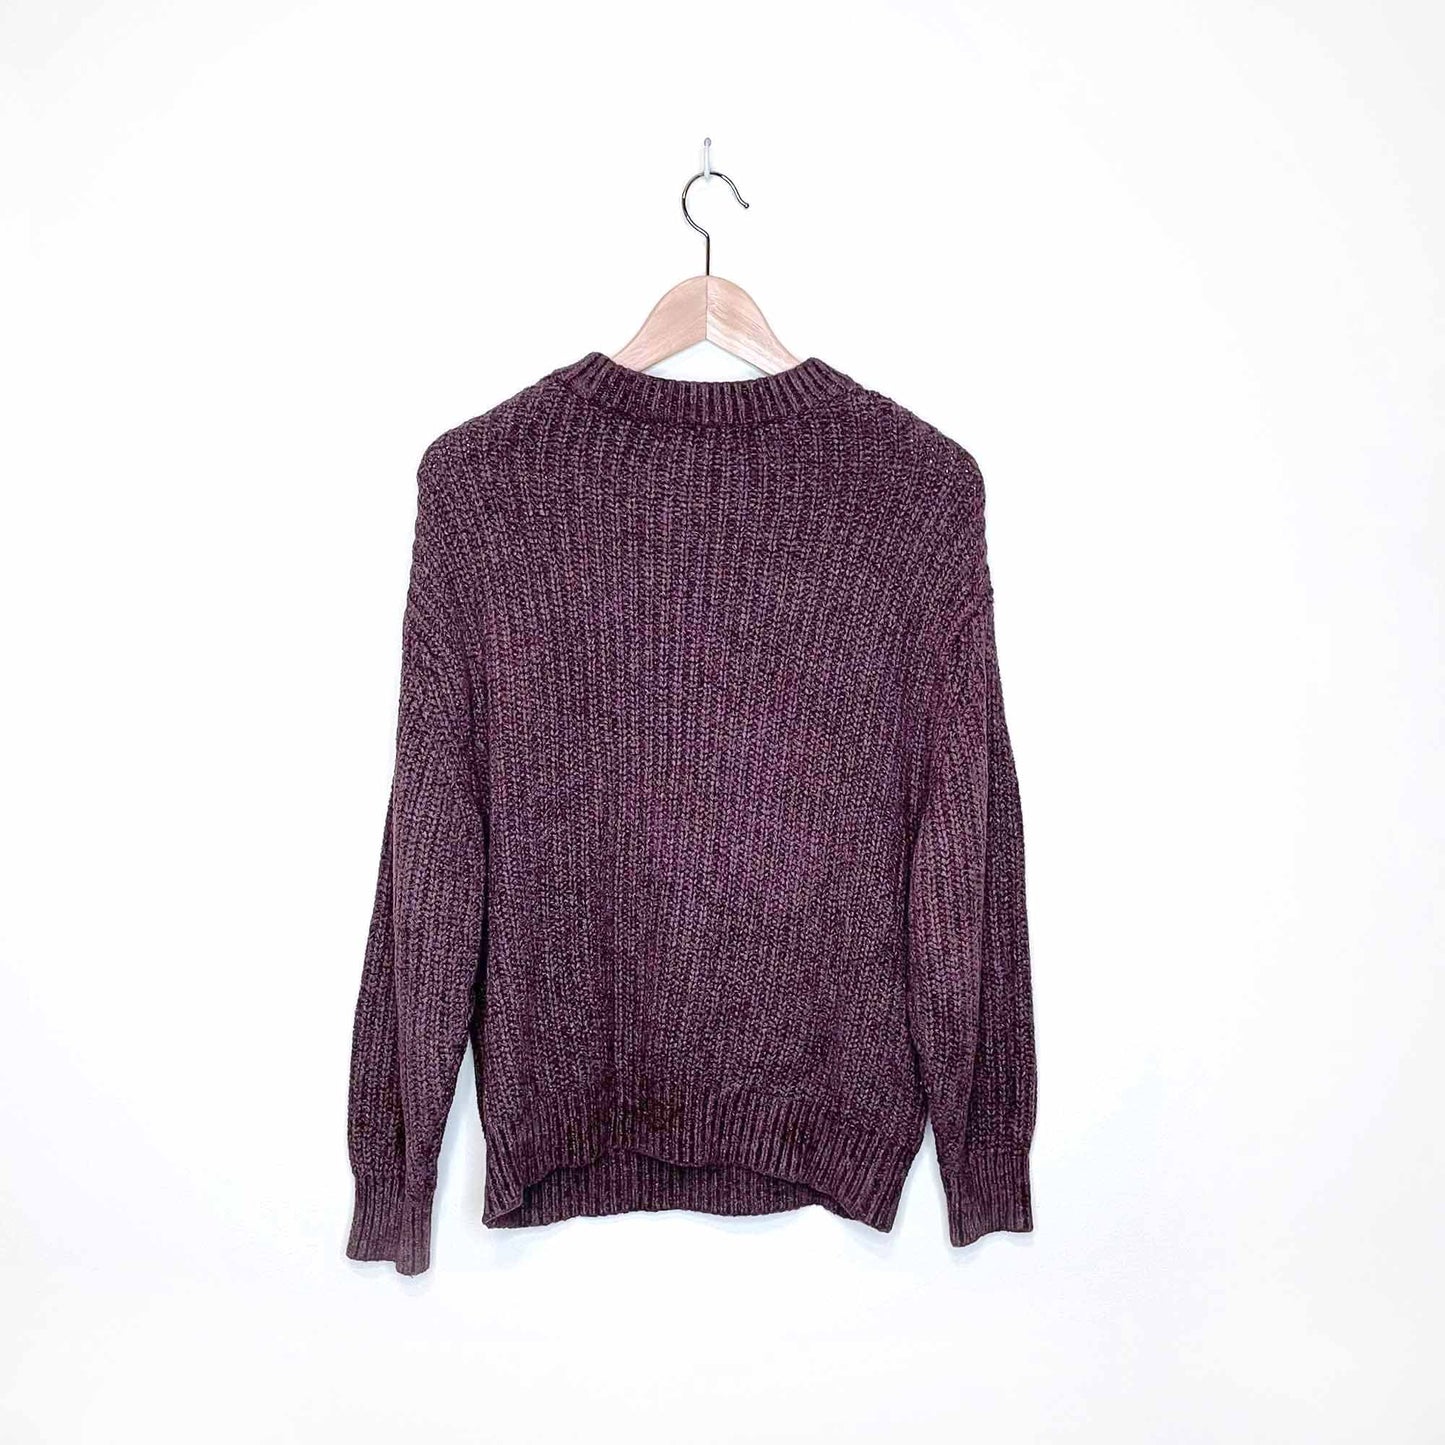 wilfred essential chenile crewneck sweater - size medium